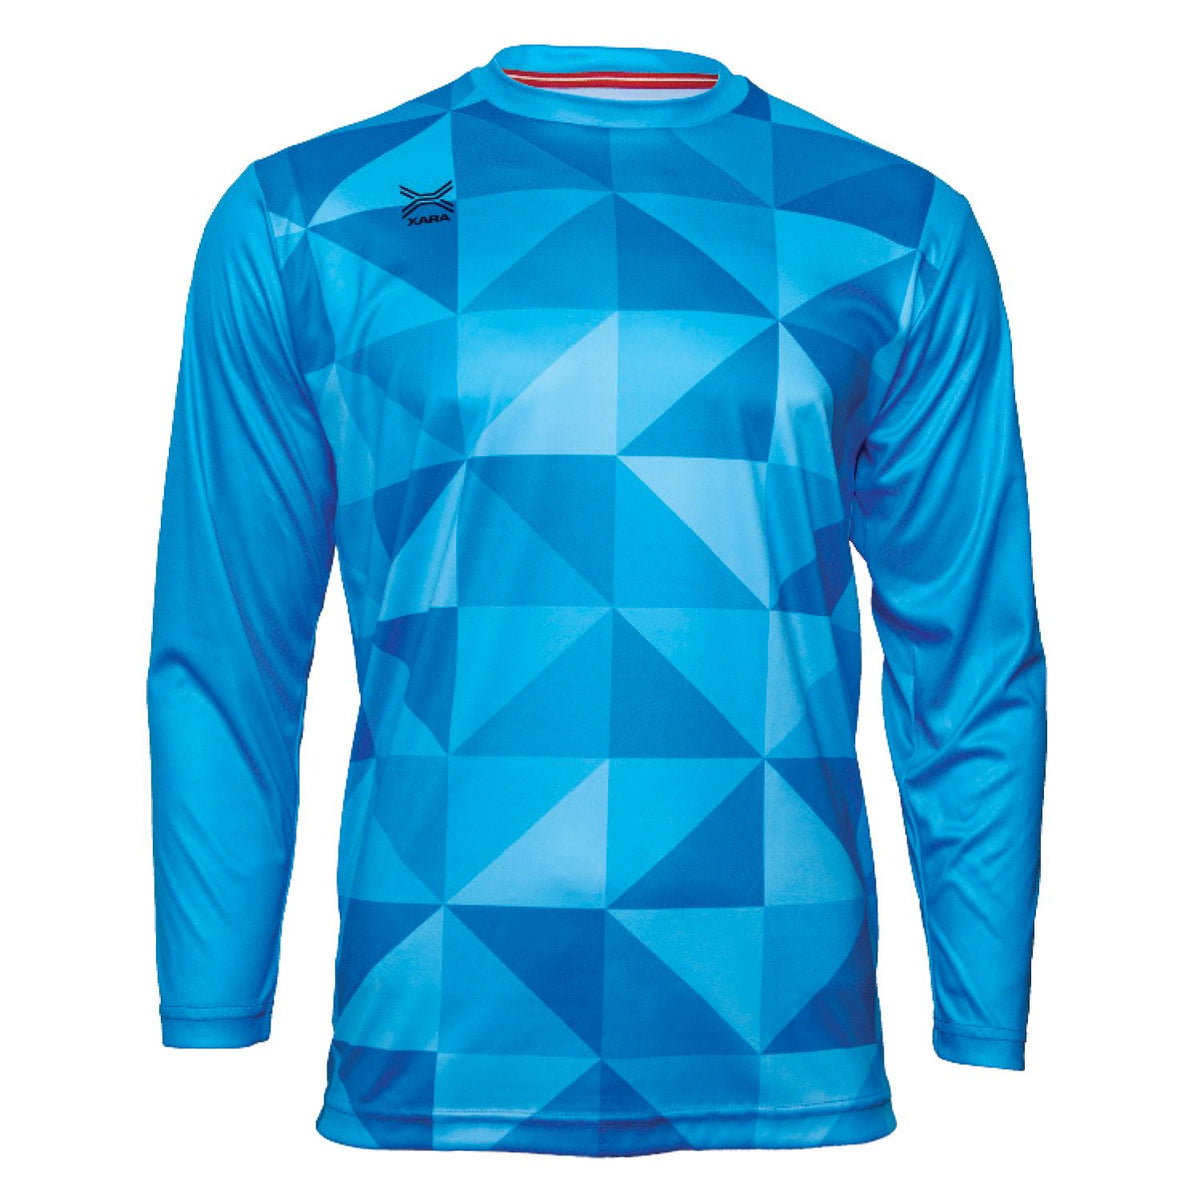 Shutout Goal Keeper Shirt - Unisex Shirt Xara Soccer Columbia Blue Youth Small 